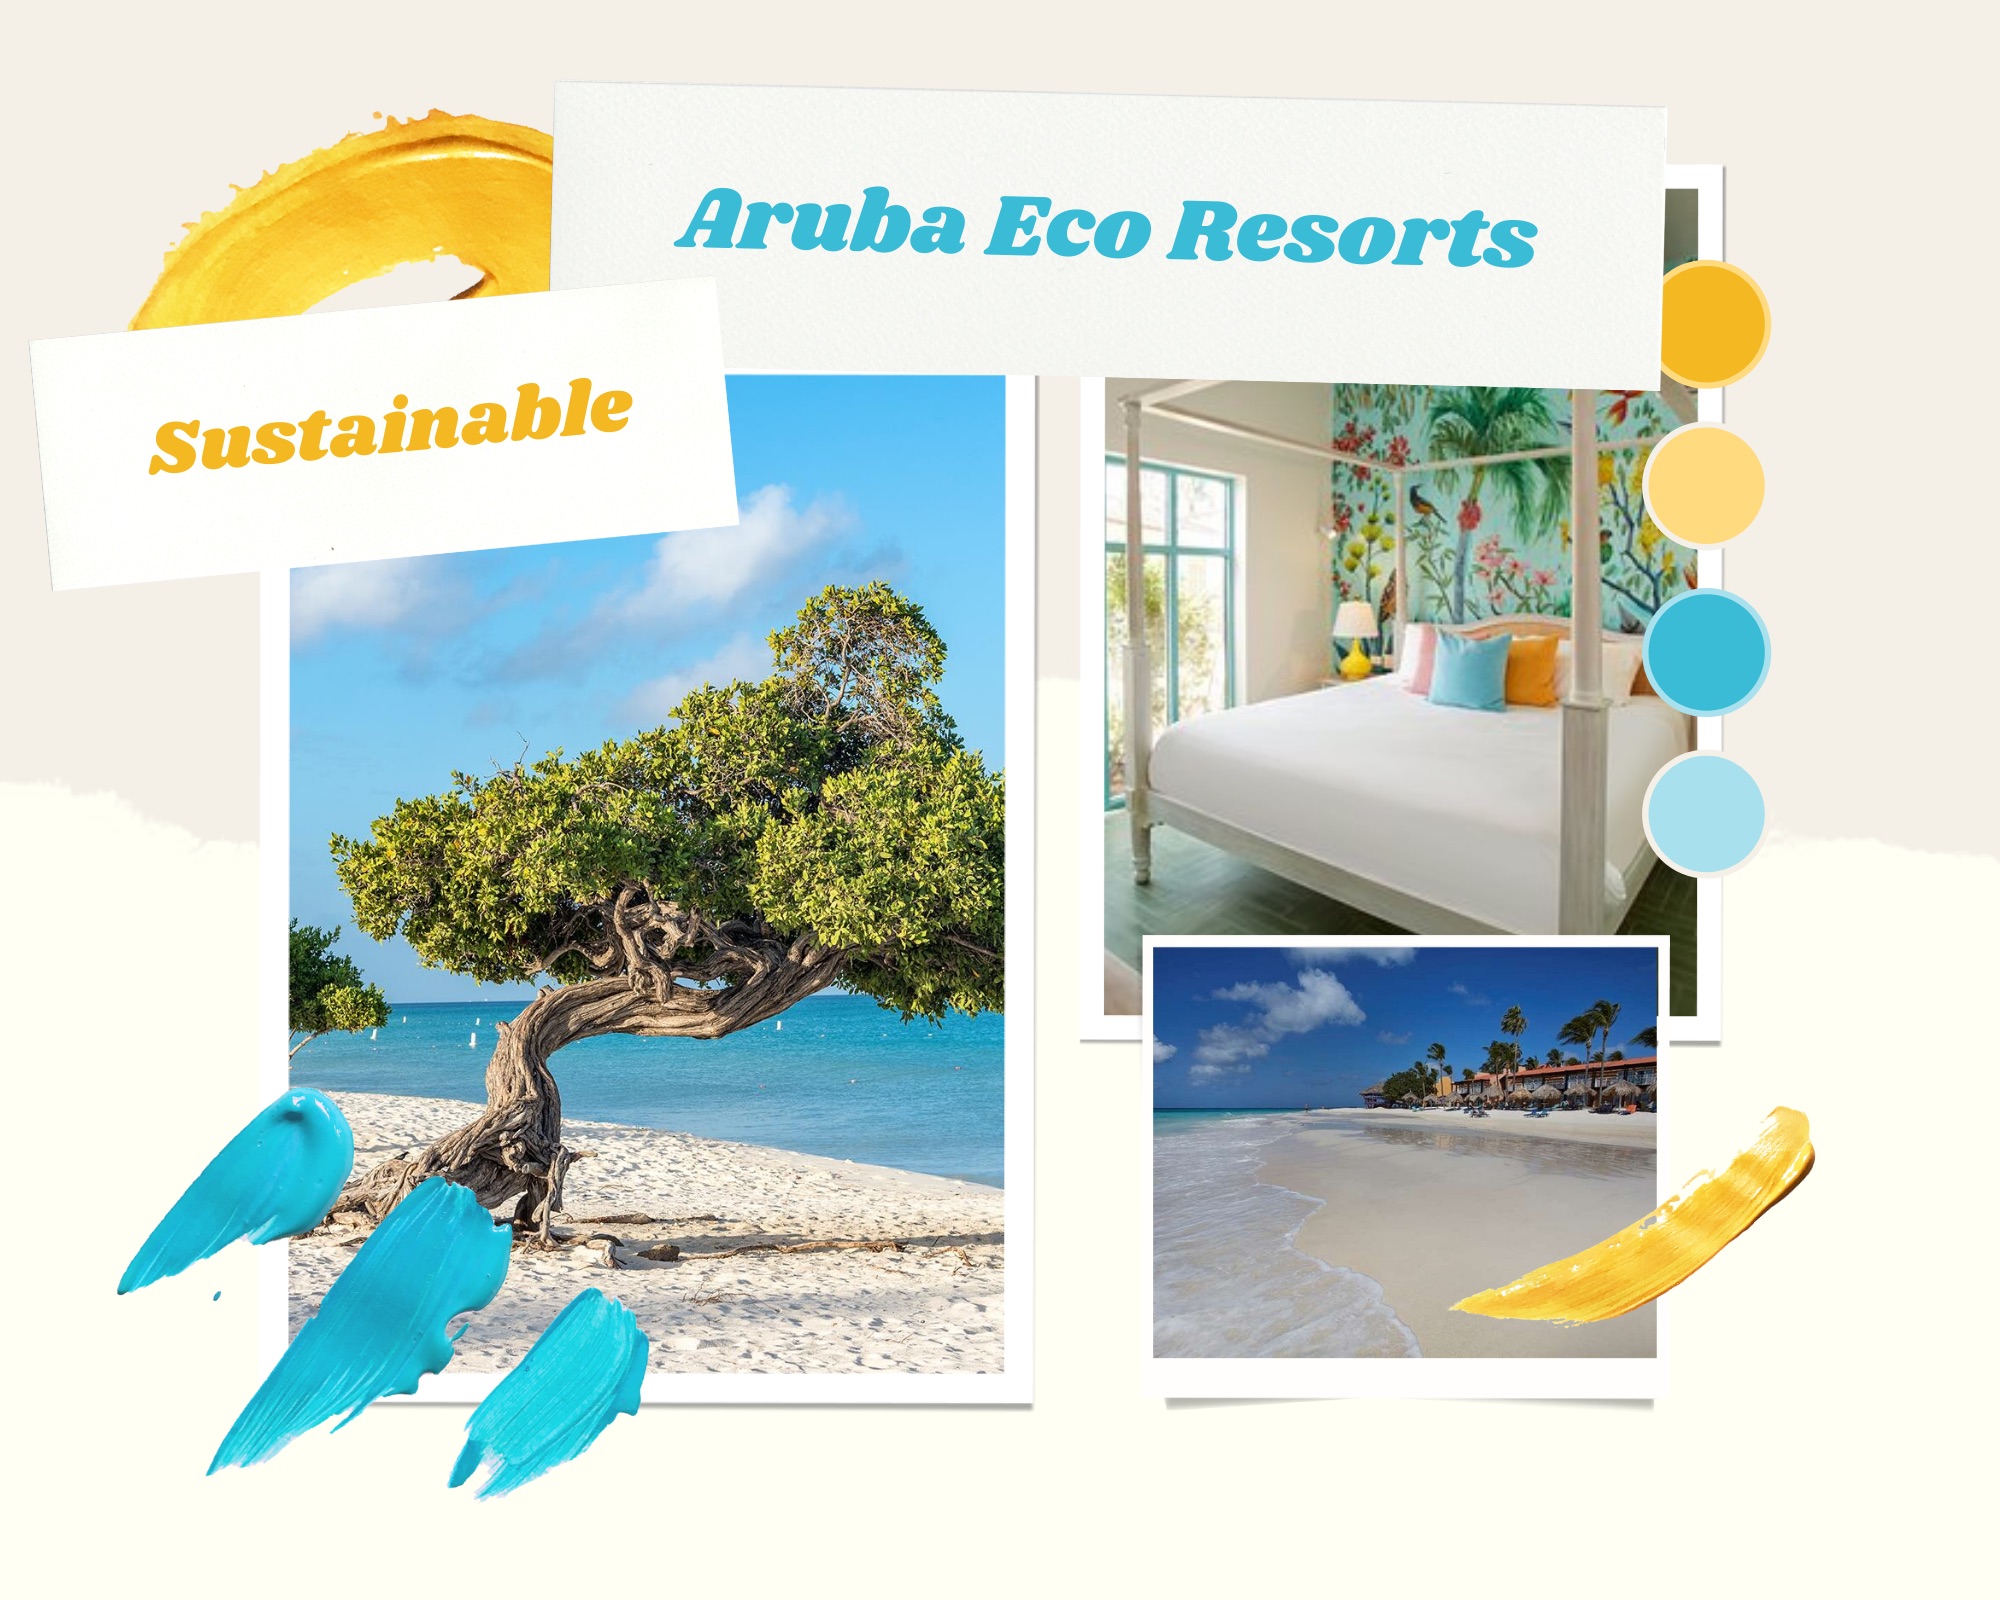 Aruba Eco Resorts